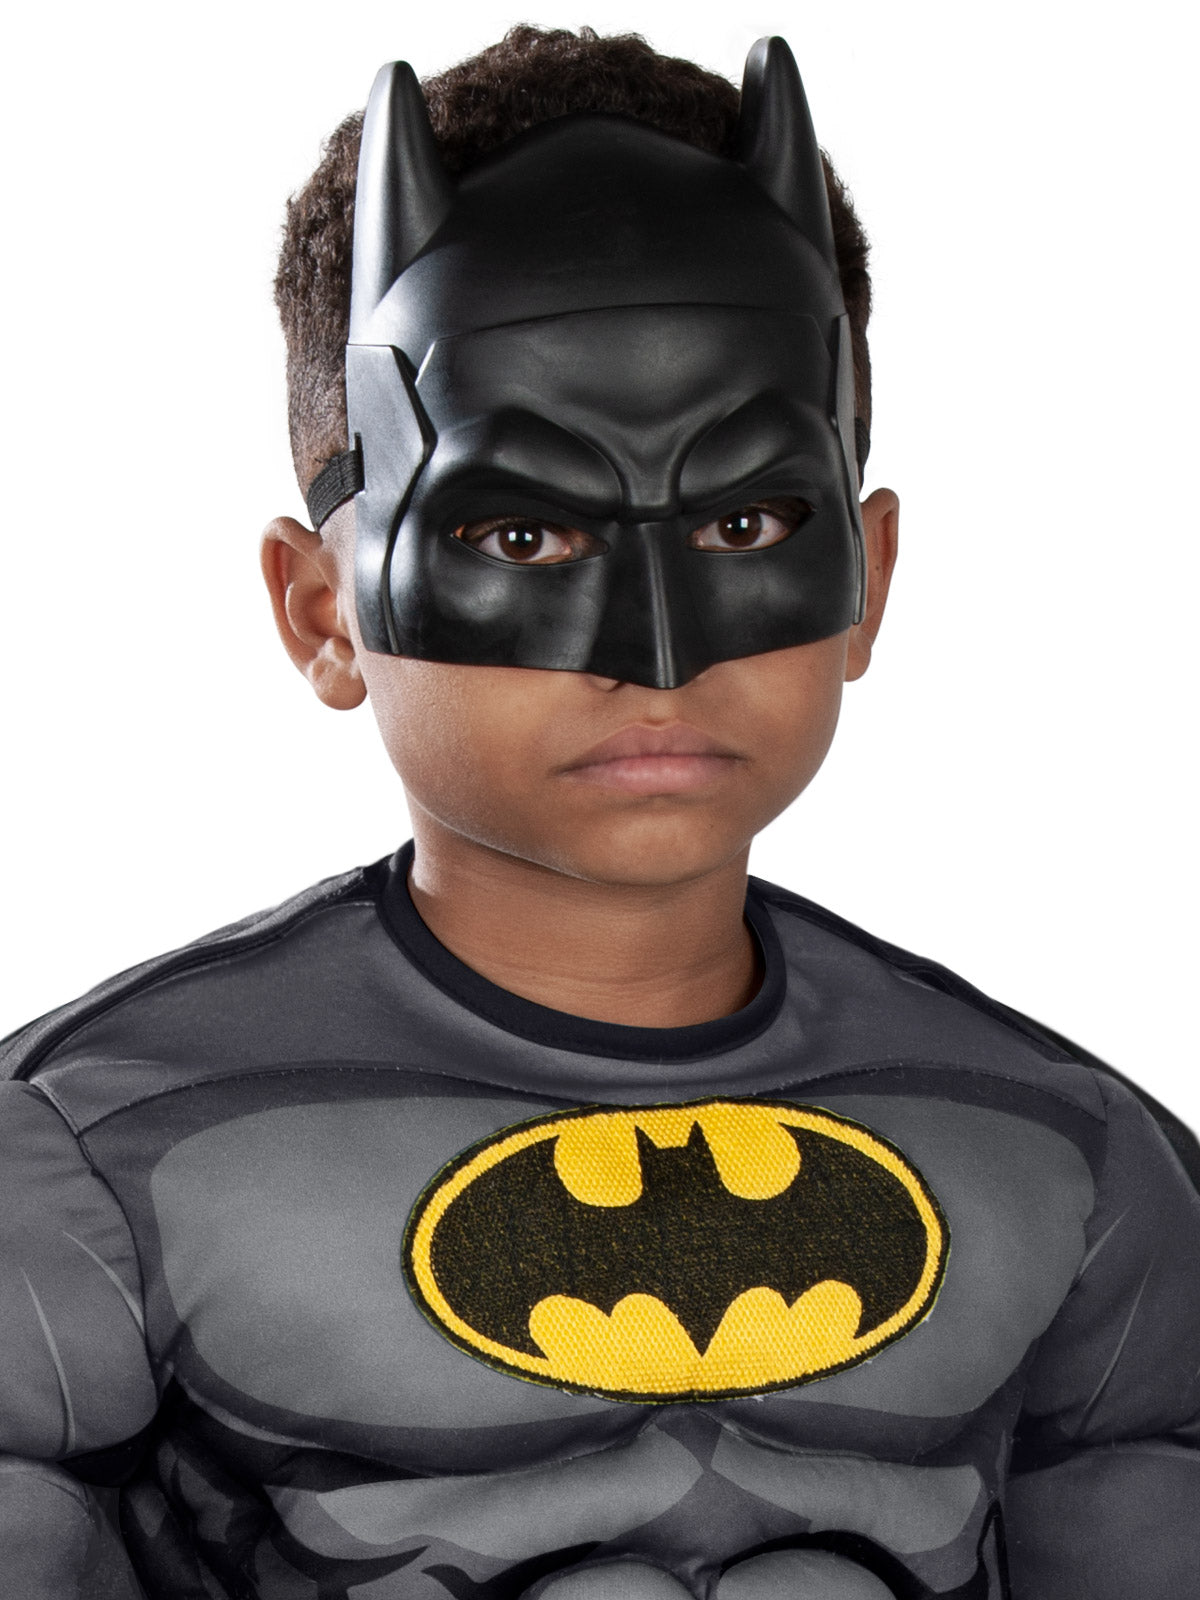 Batman Toddler Costume, DC Superheroes